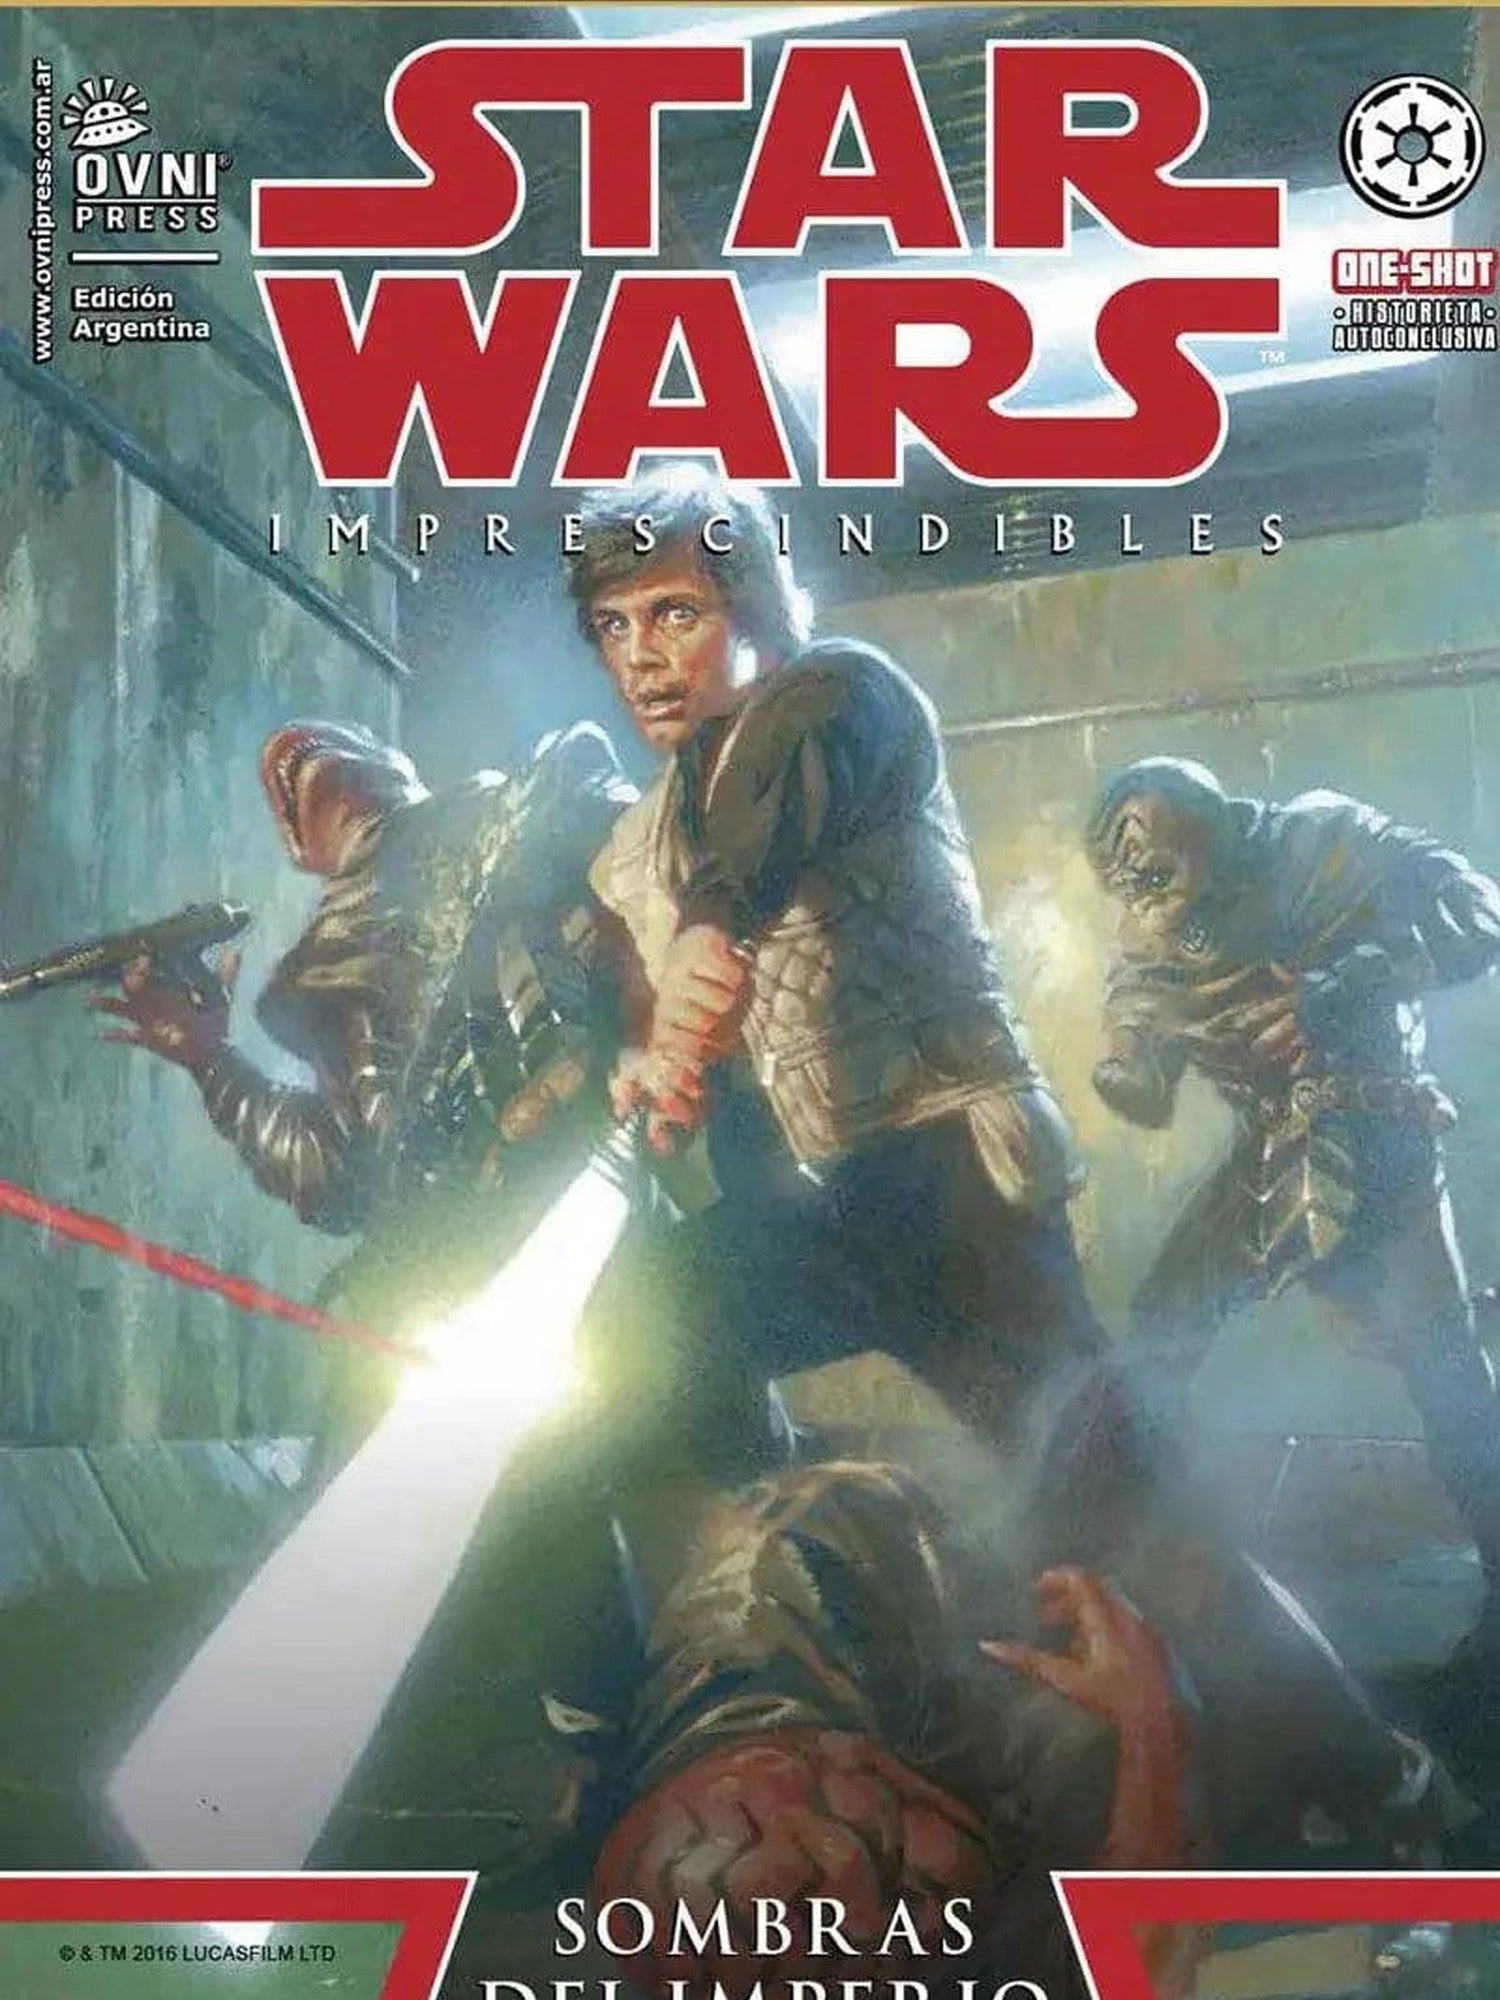 Star Wars Imprescindibles 4: Sombra del Imperio